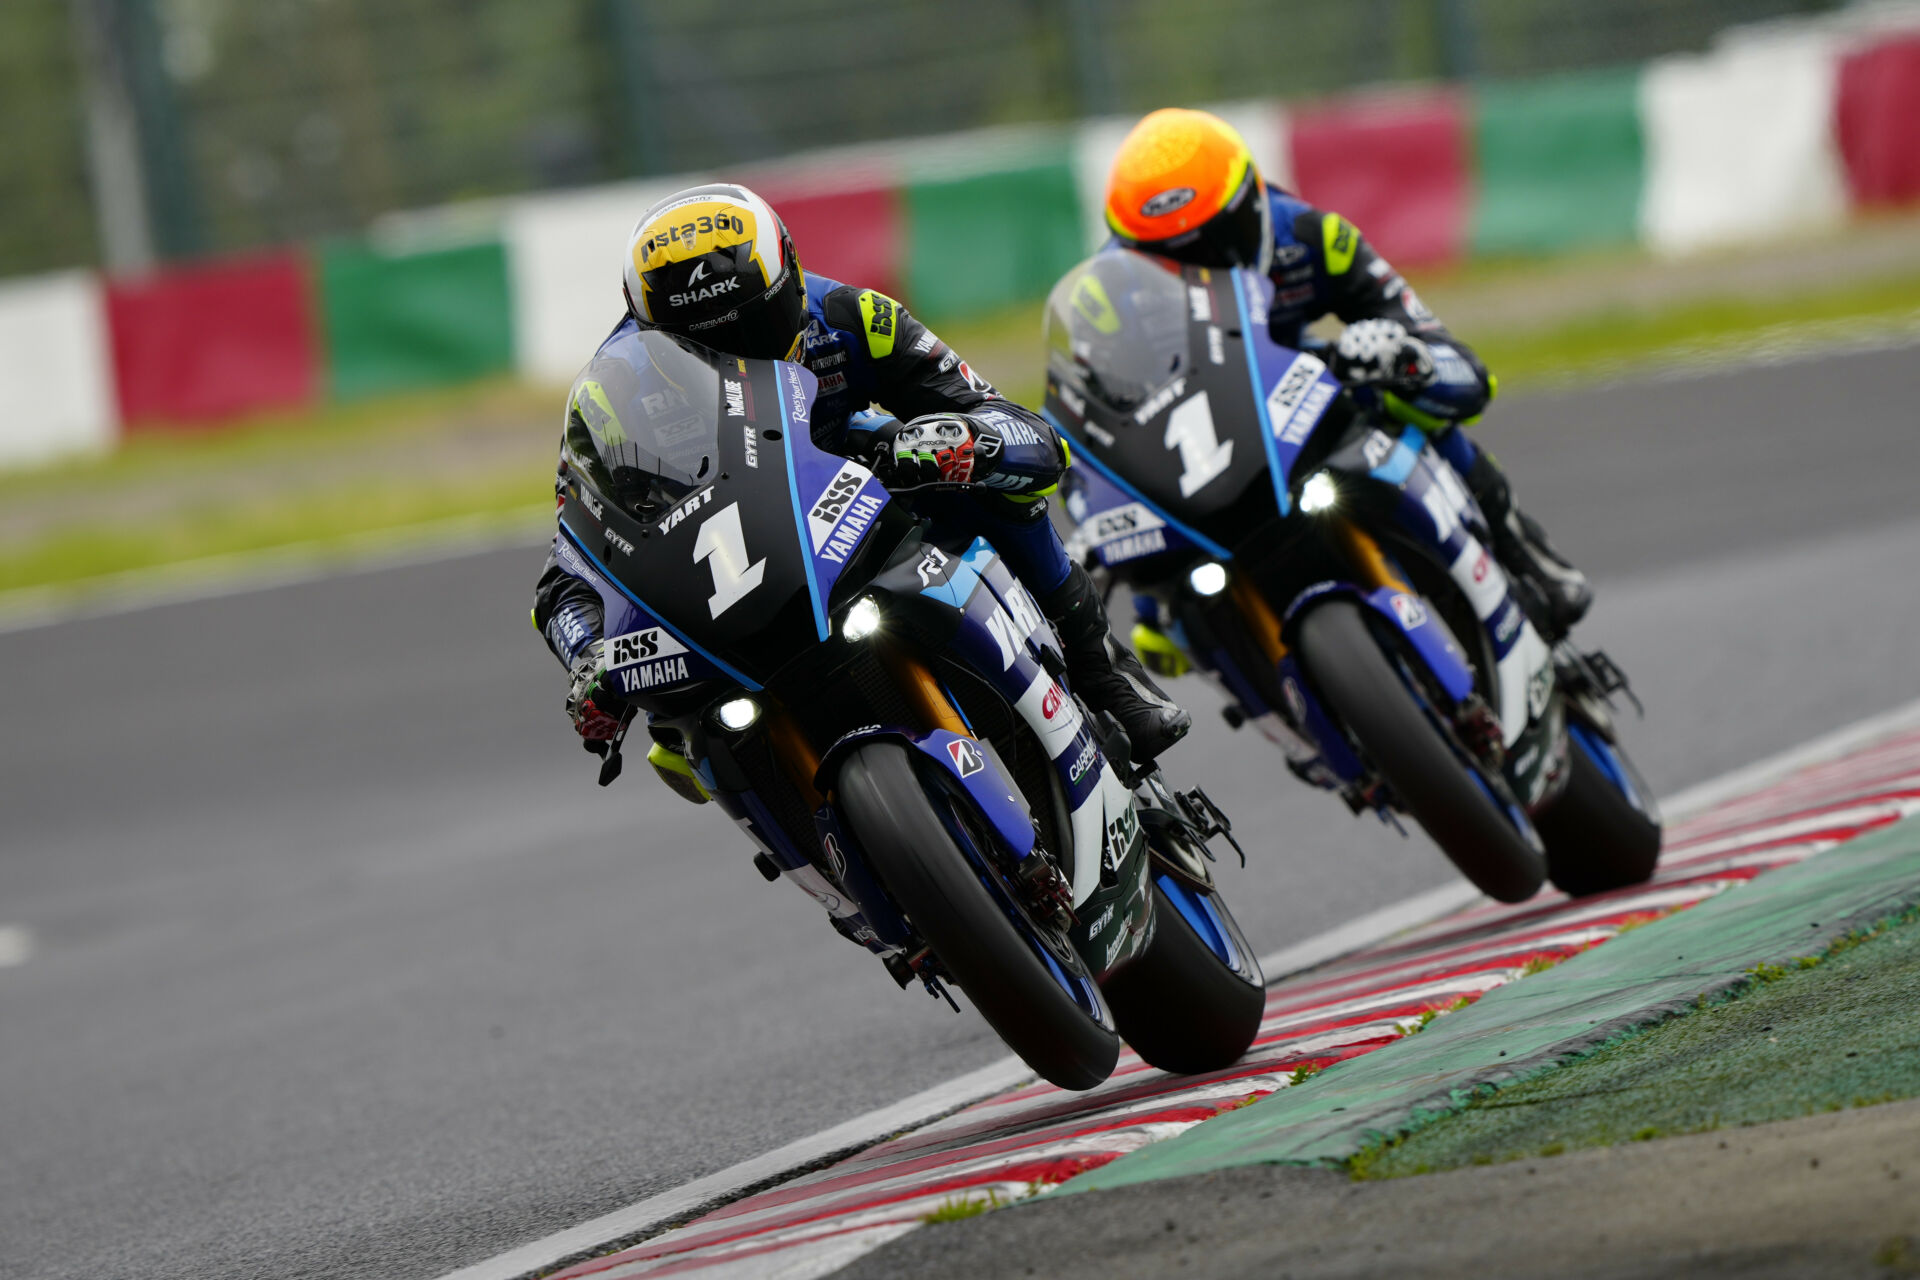 Niccolo Canepa leads teammate Karel Hanika during testing at Suzuka, in Japan. Photo courtesy Yamaha.